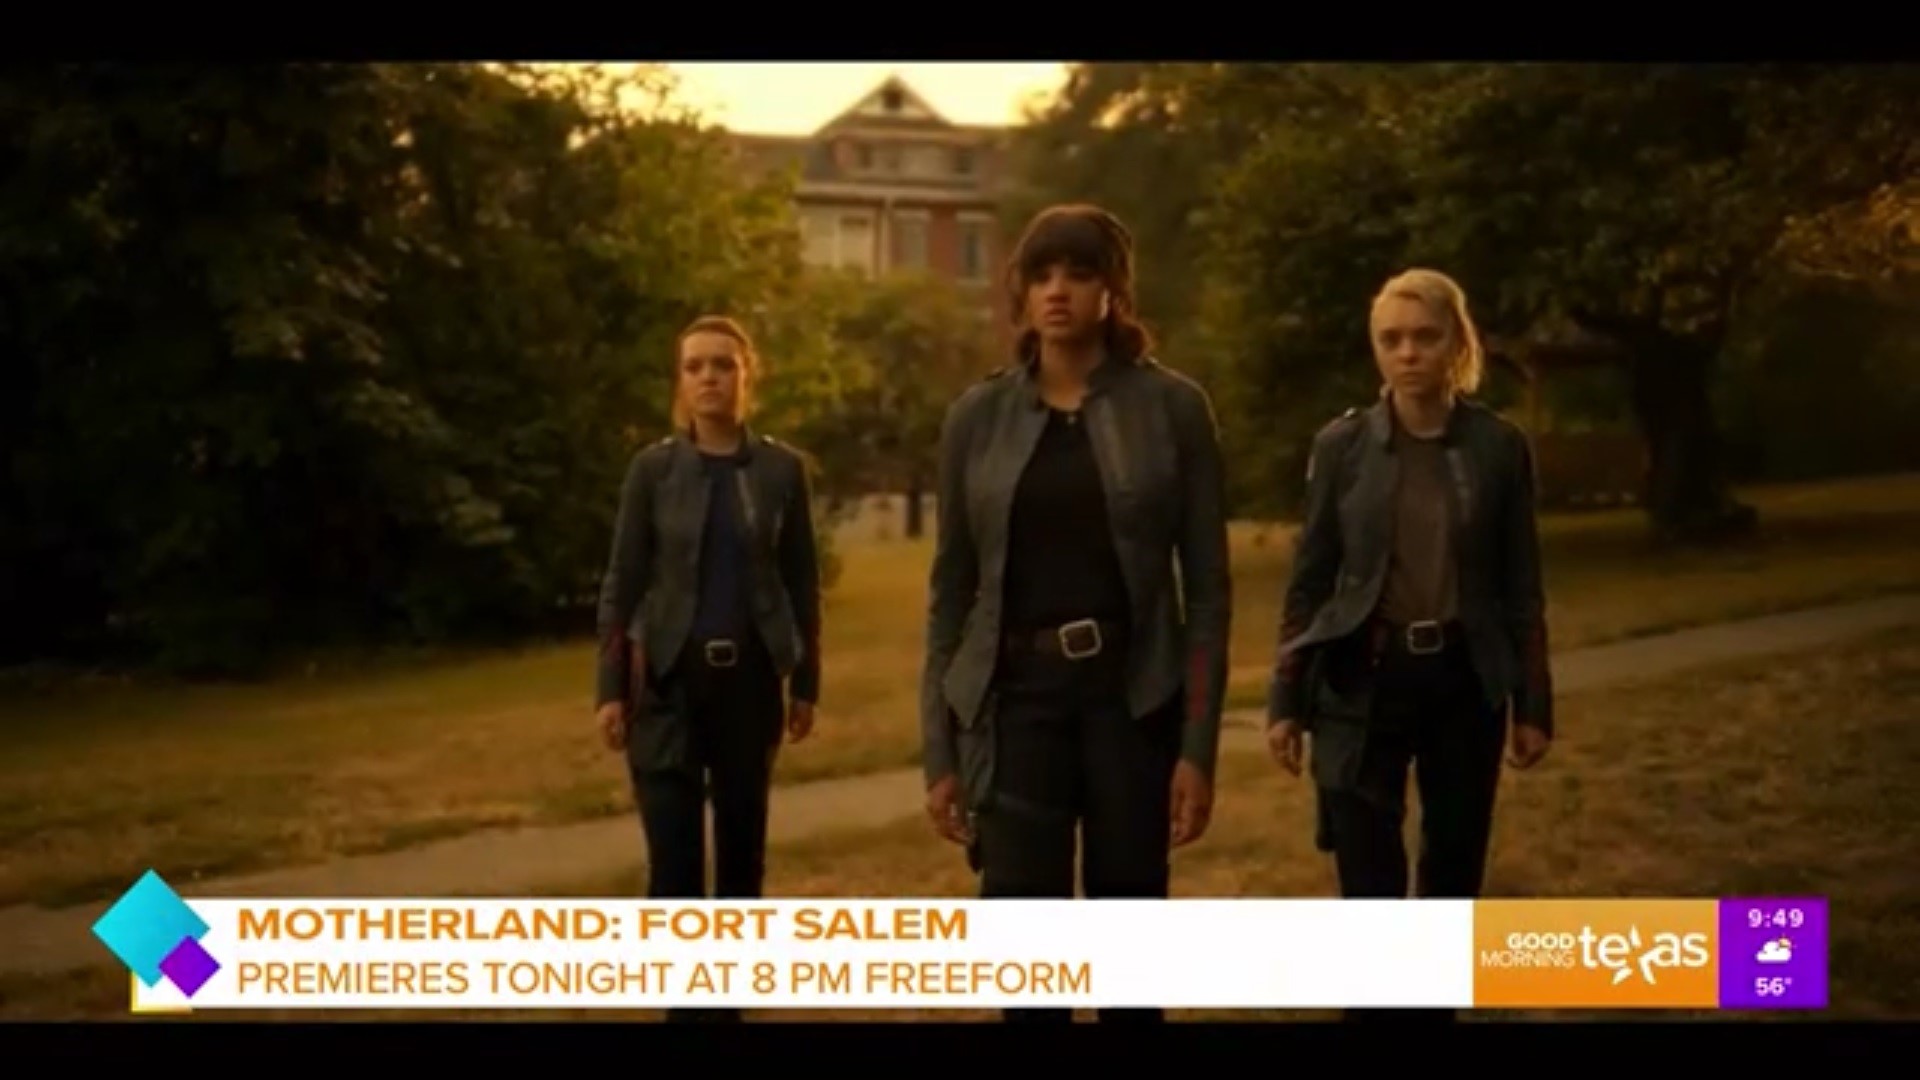 Motherland: Fort Salem airs Wednesday nights at 8 on Freeform.